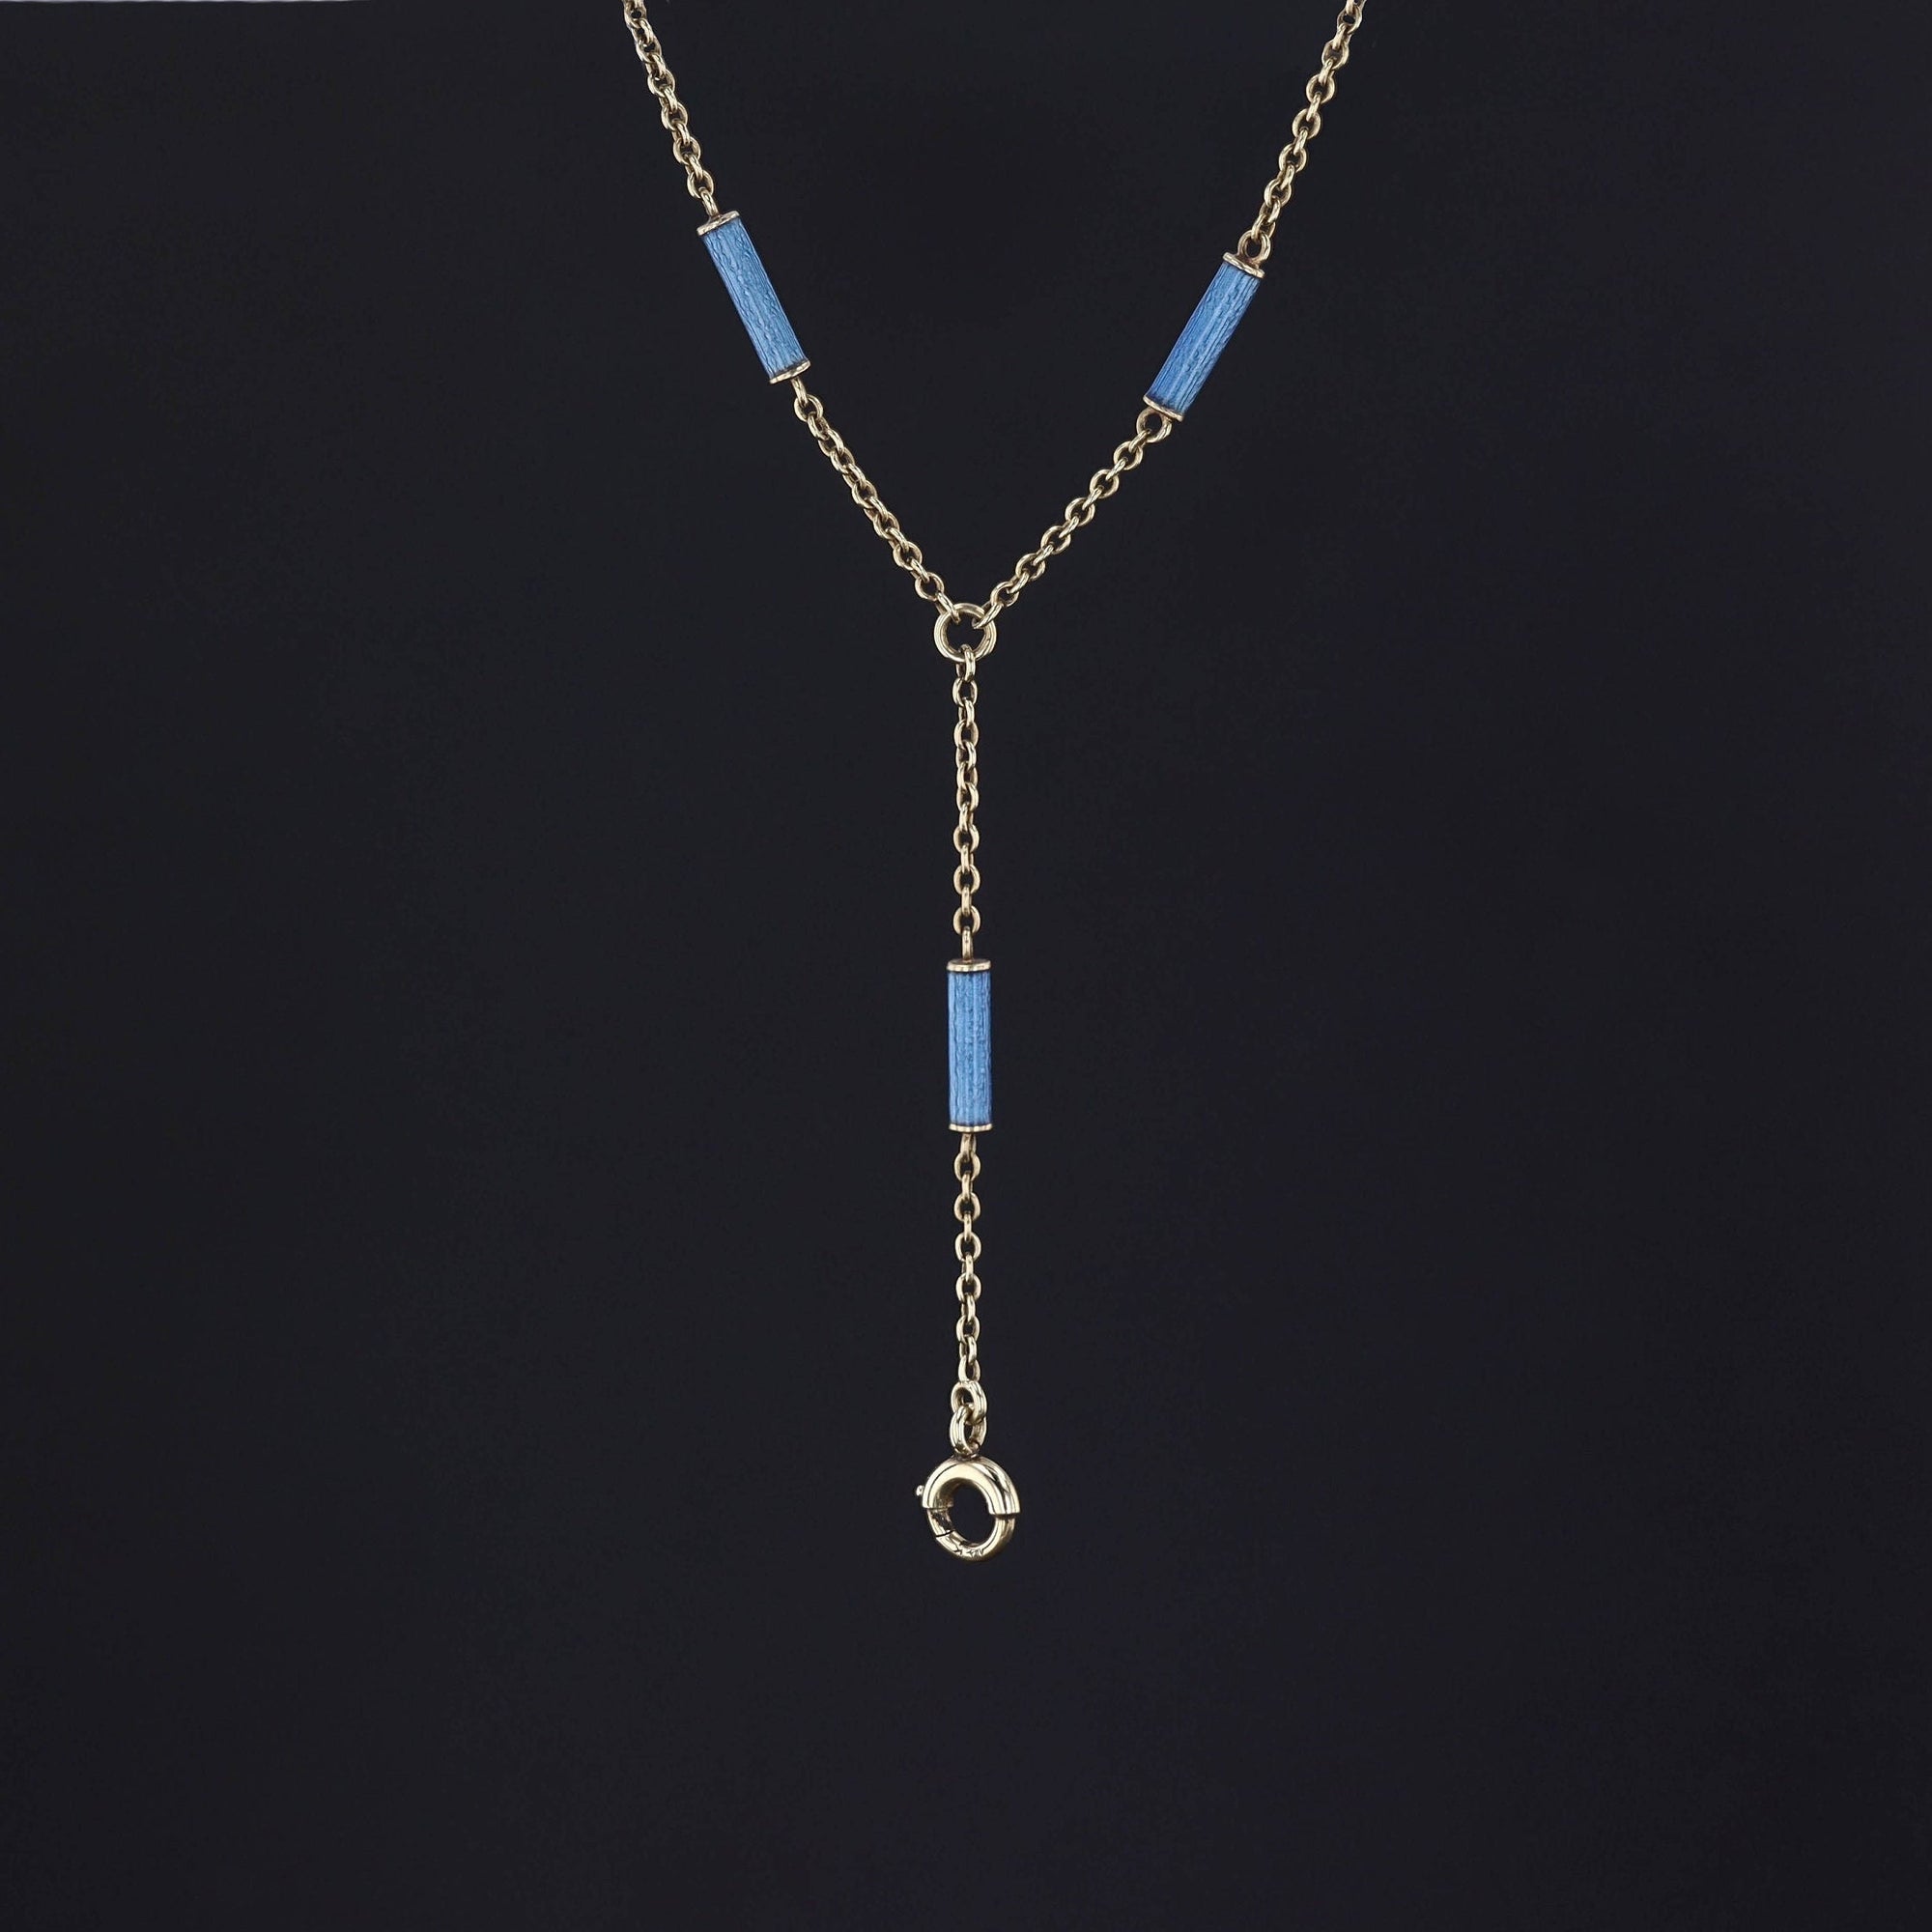 Antique Enamel Chain Necklace of 14k Gold